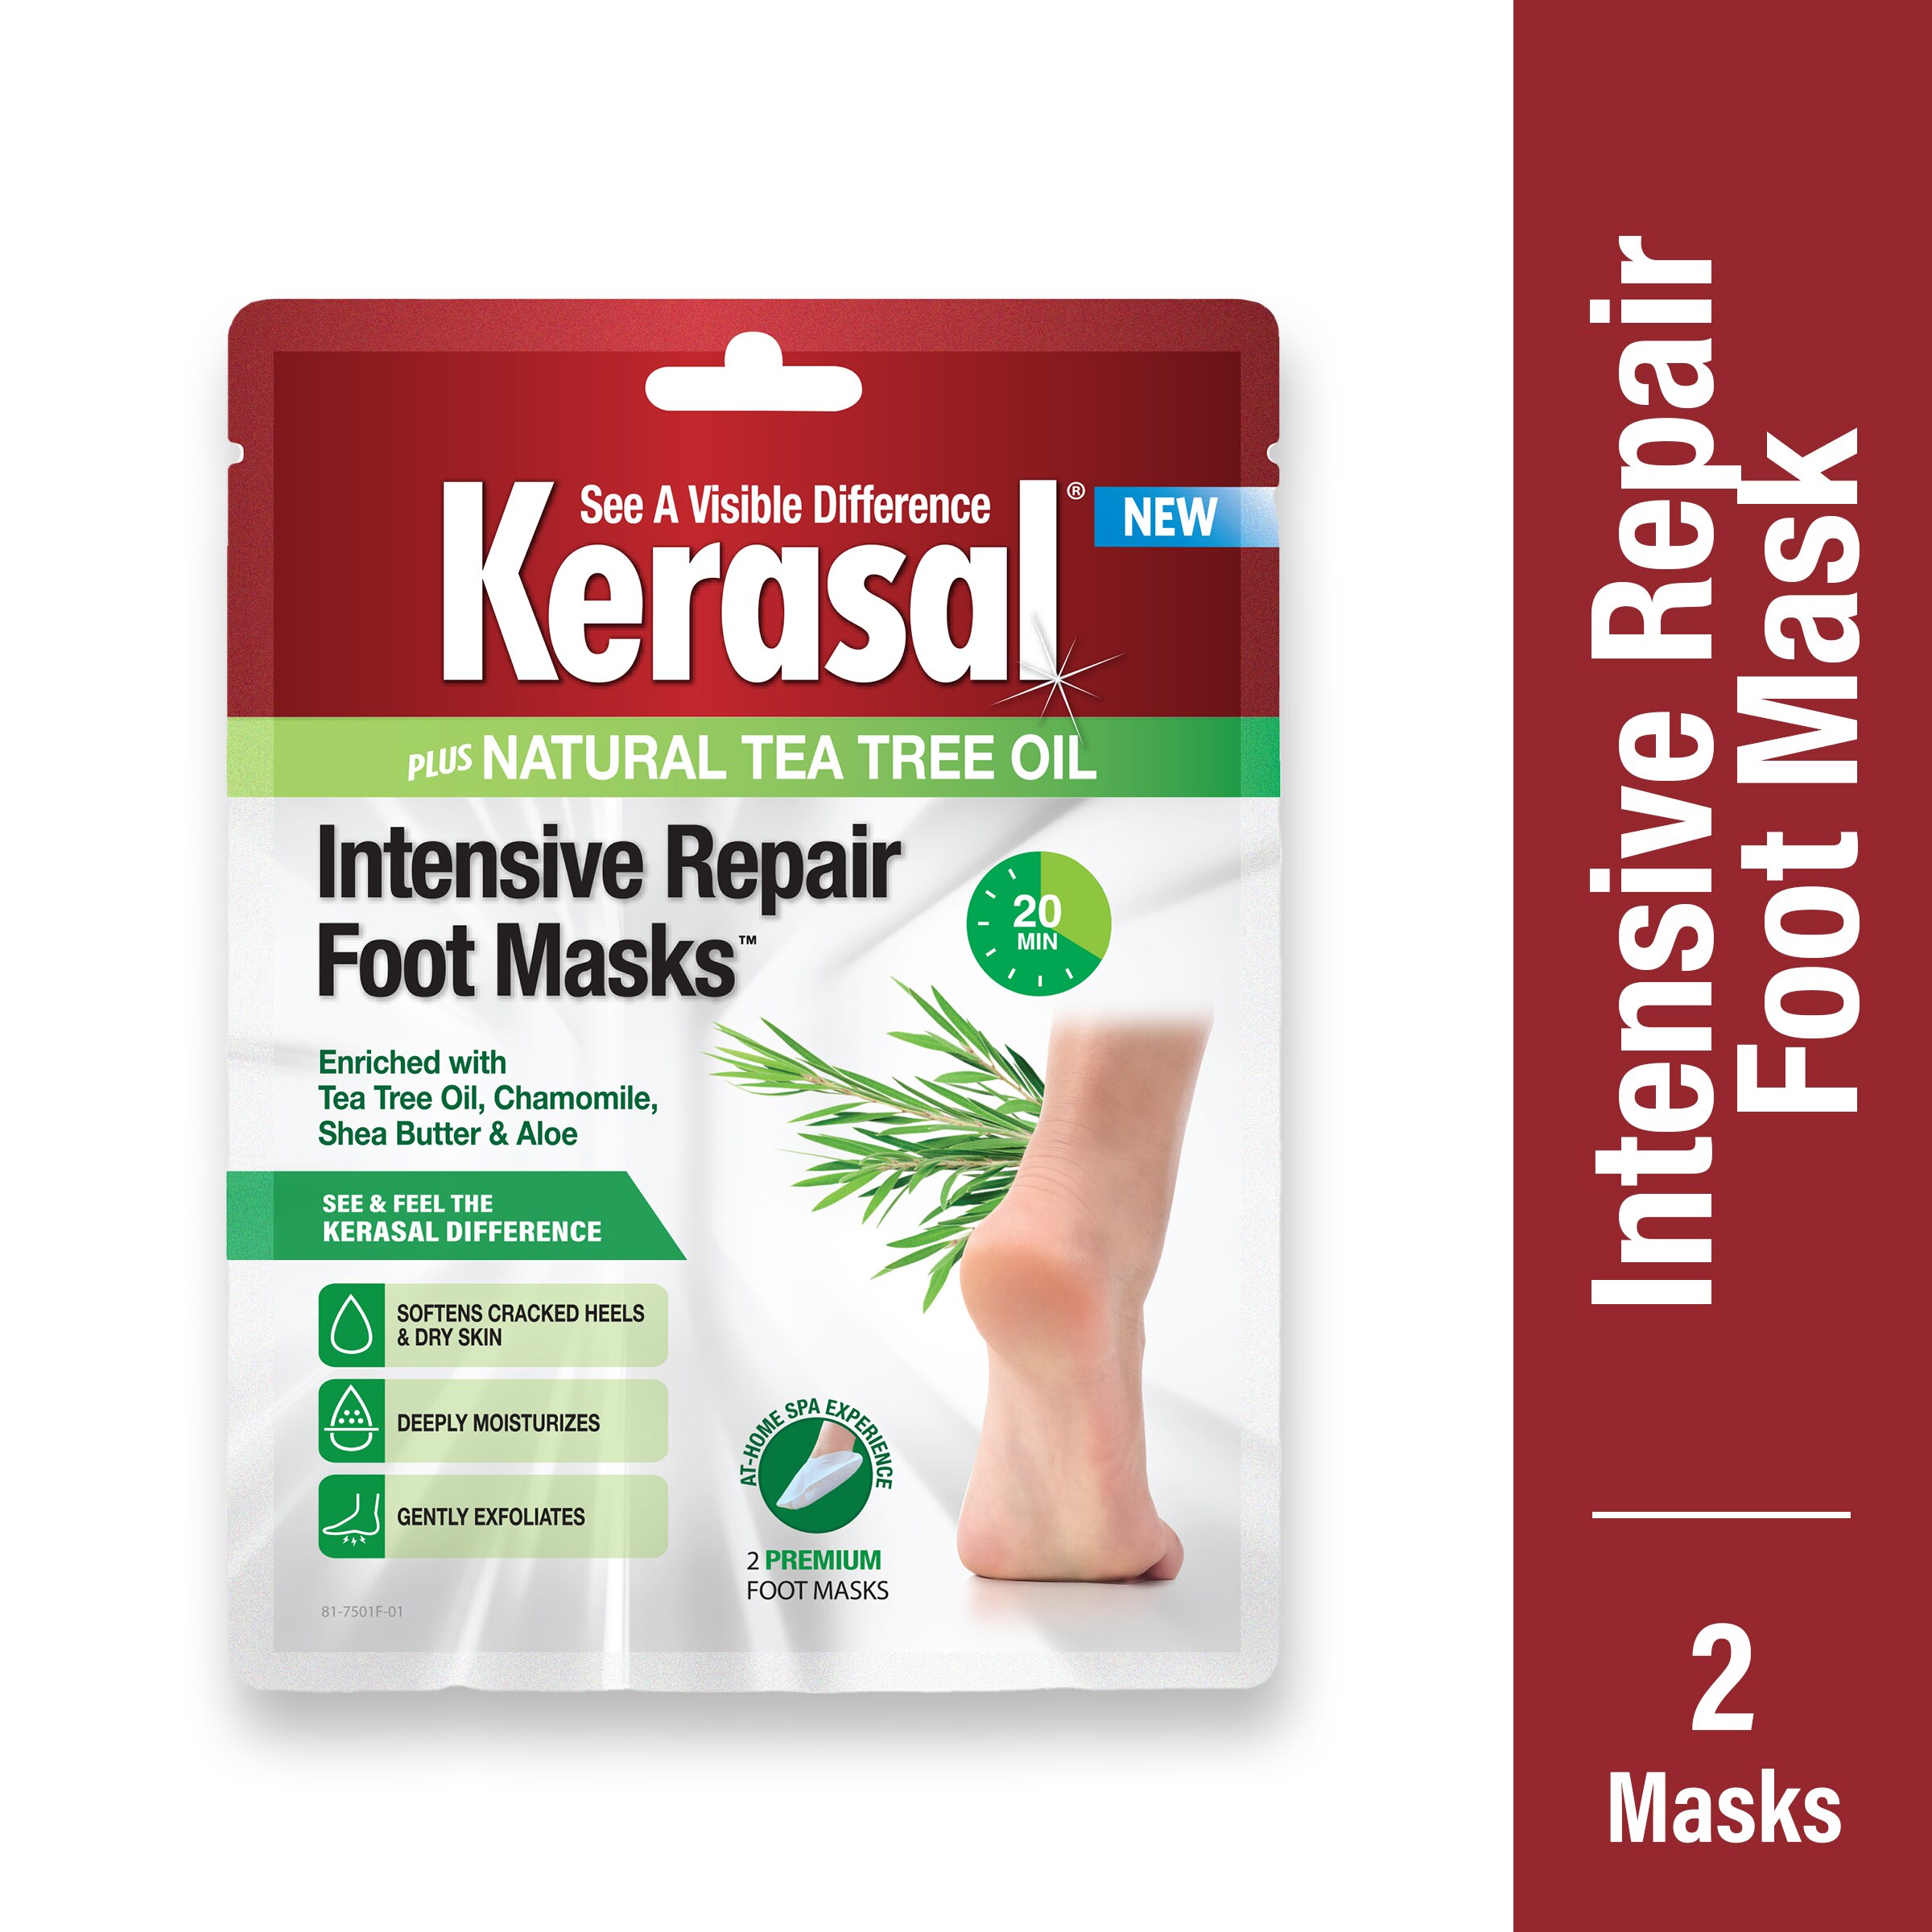 Kerasal Intensive Repair Foot Mask, Foot Mask for Cracked Heels and Dry Feet, One Pair